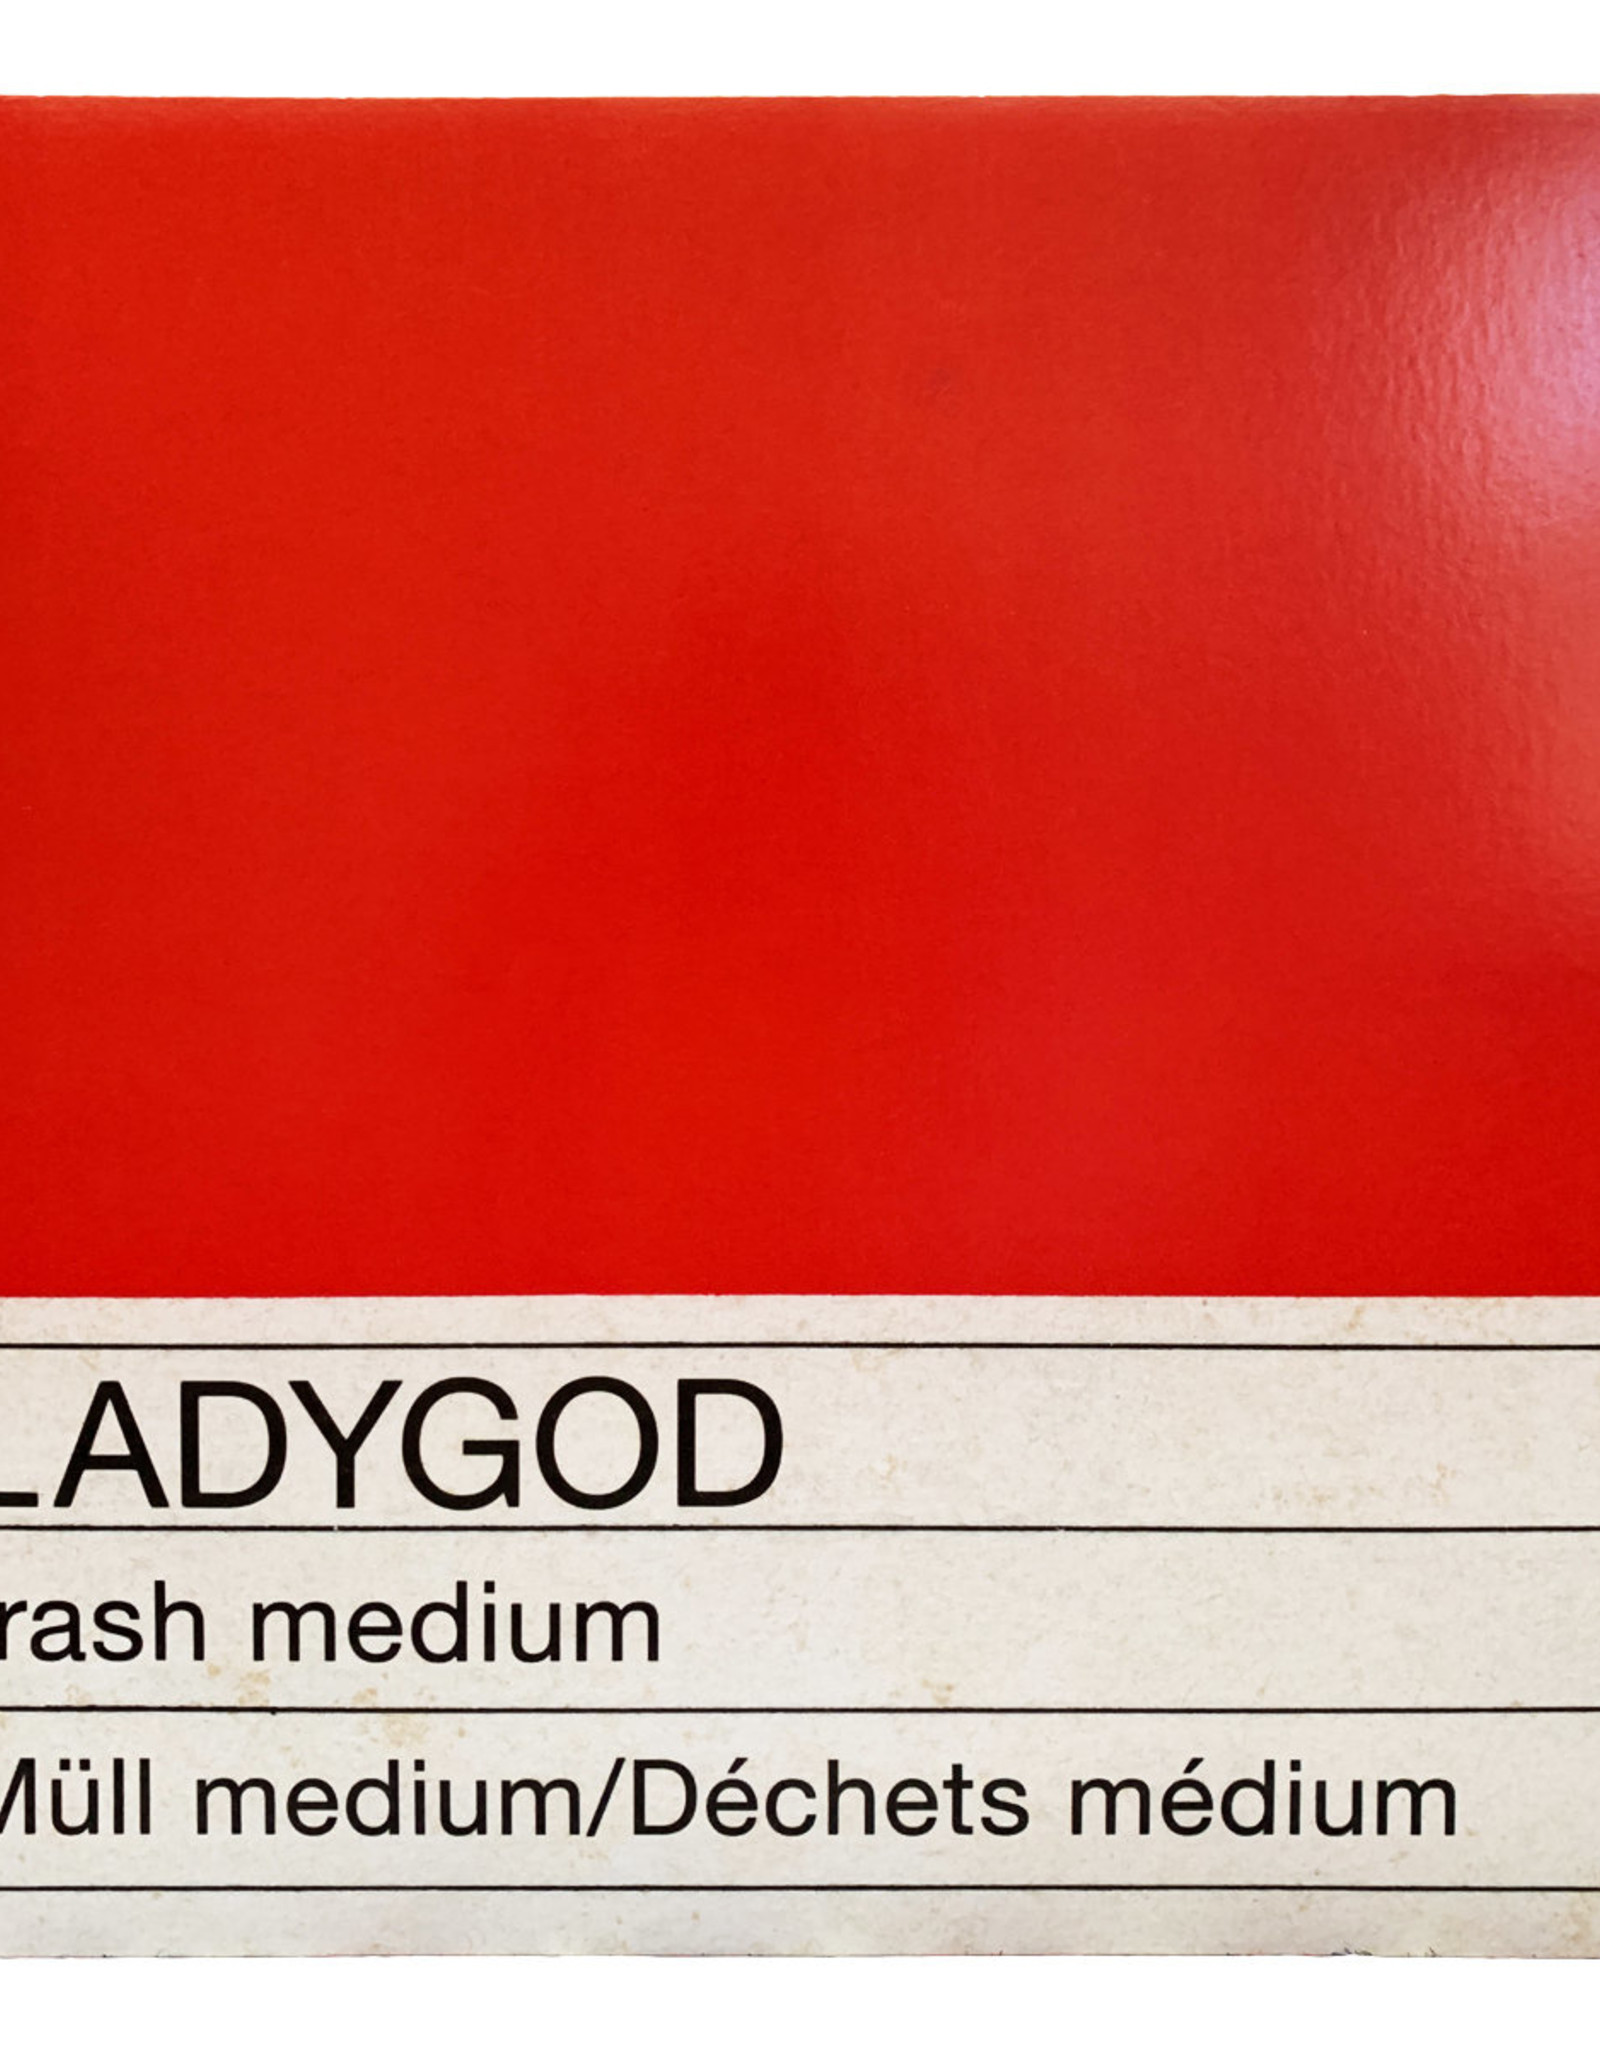 ladygod - trash medium